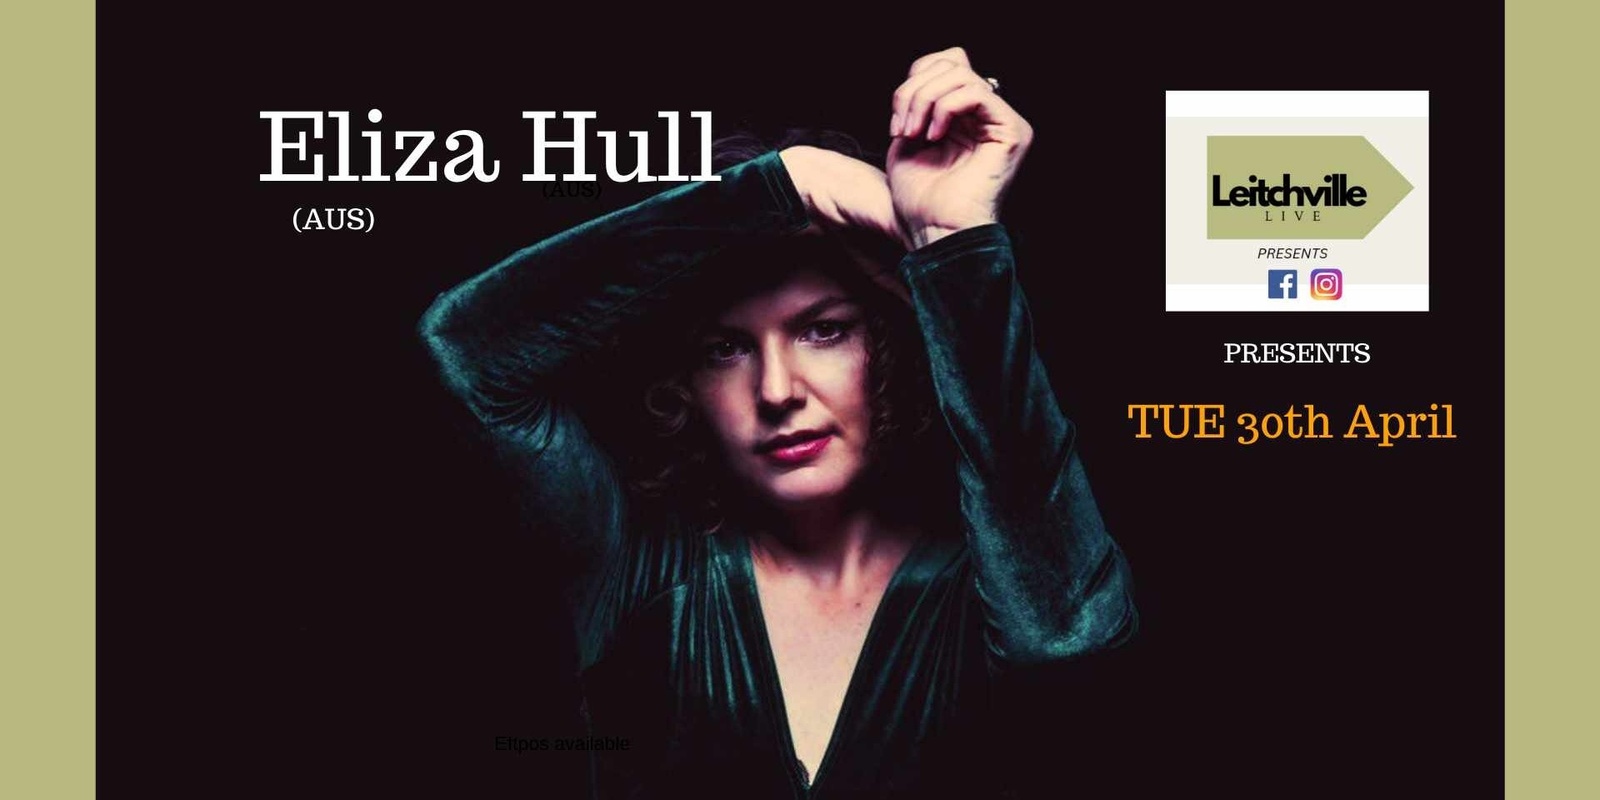 Banner image for Leitchville LIVE Presents - Eliza Hull (AUS)